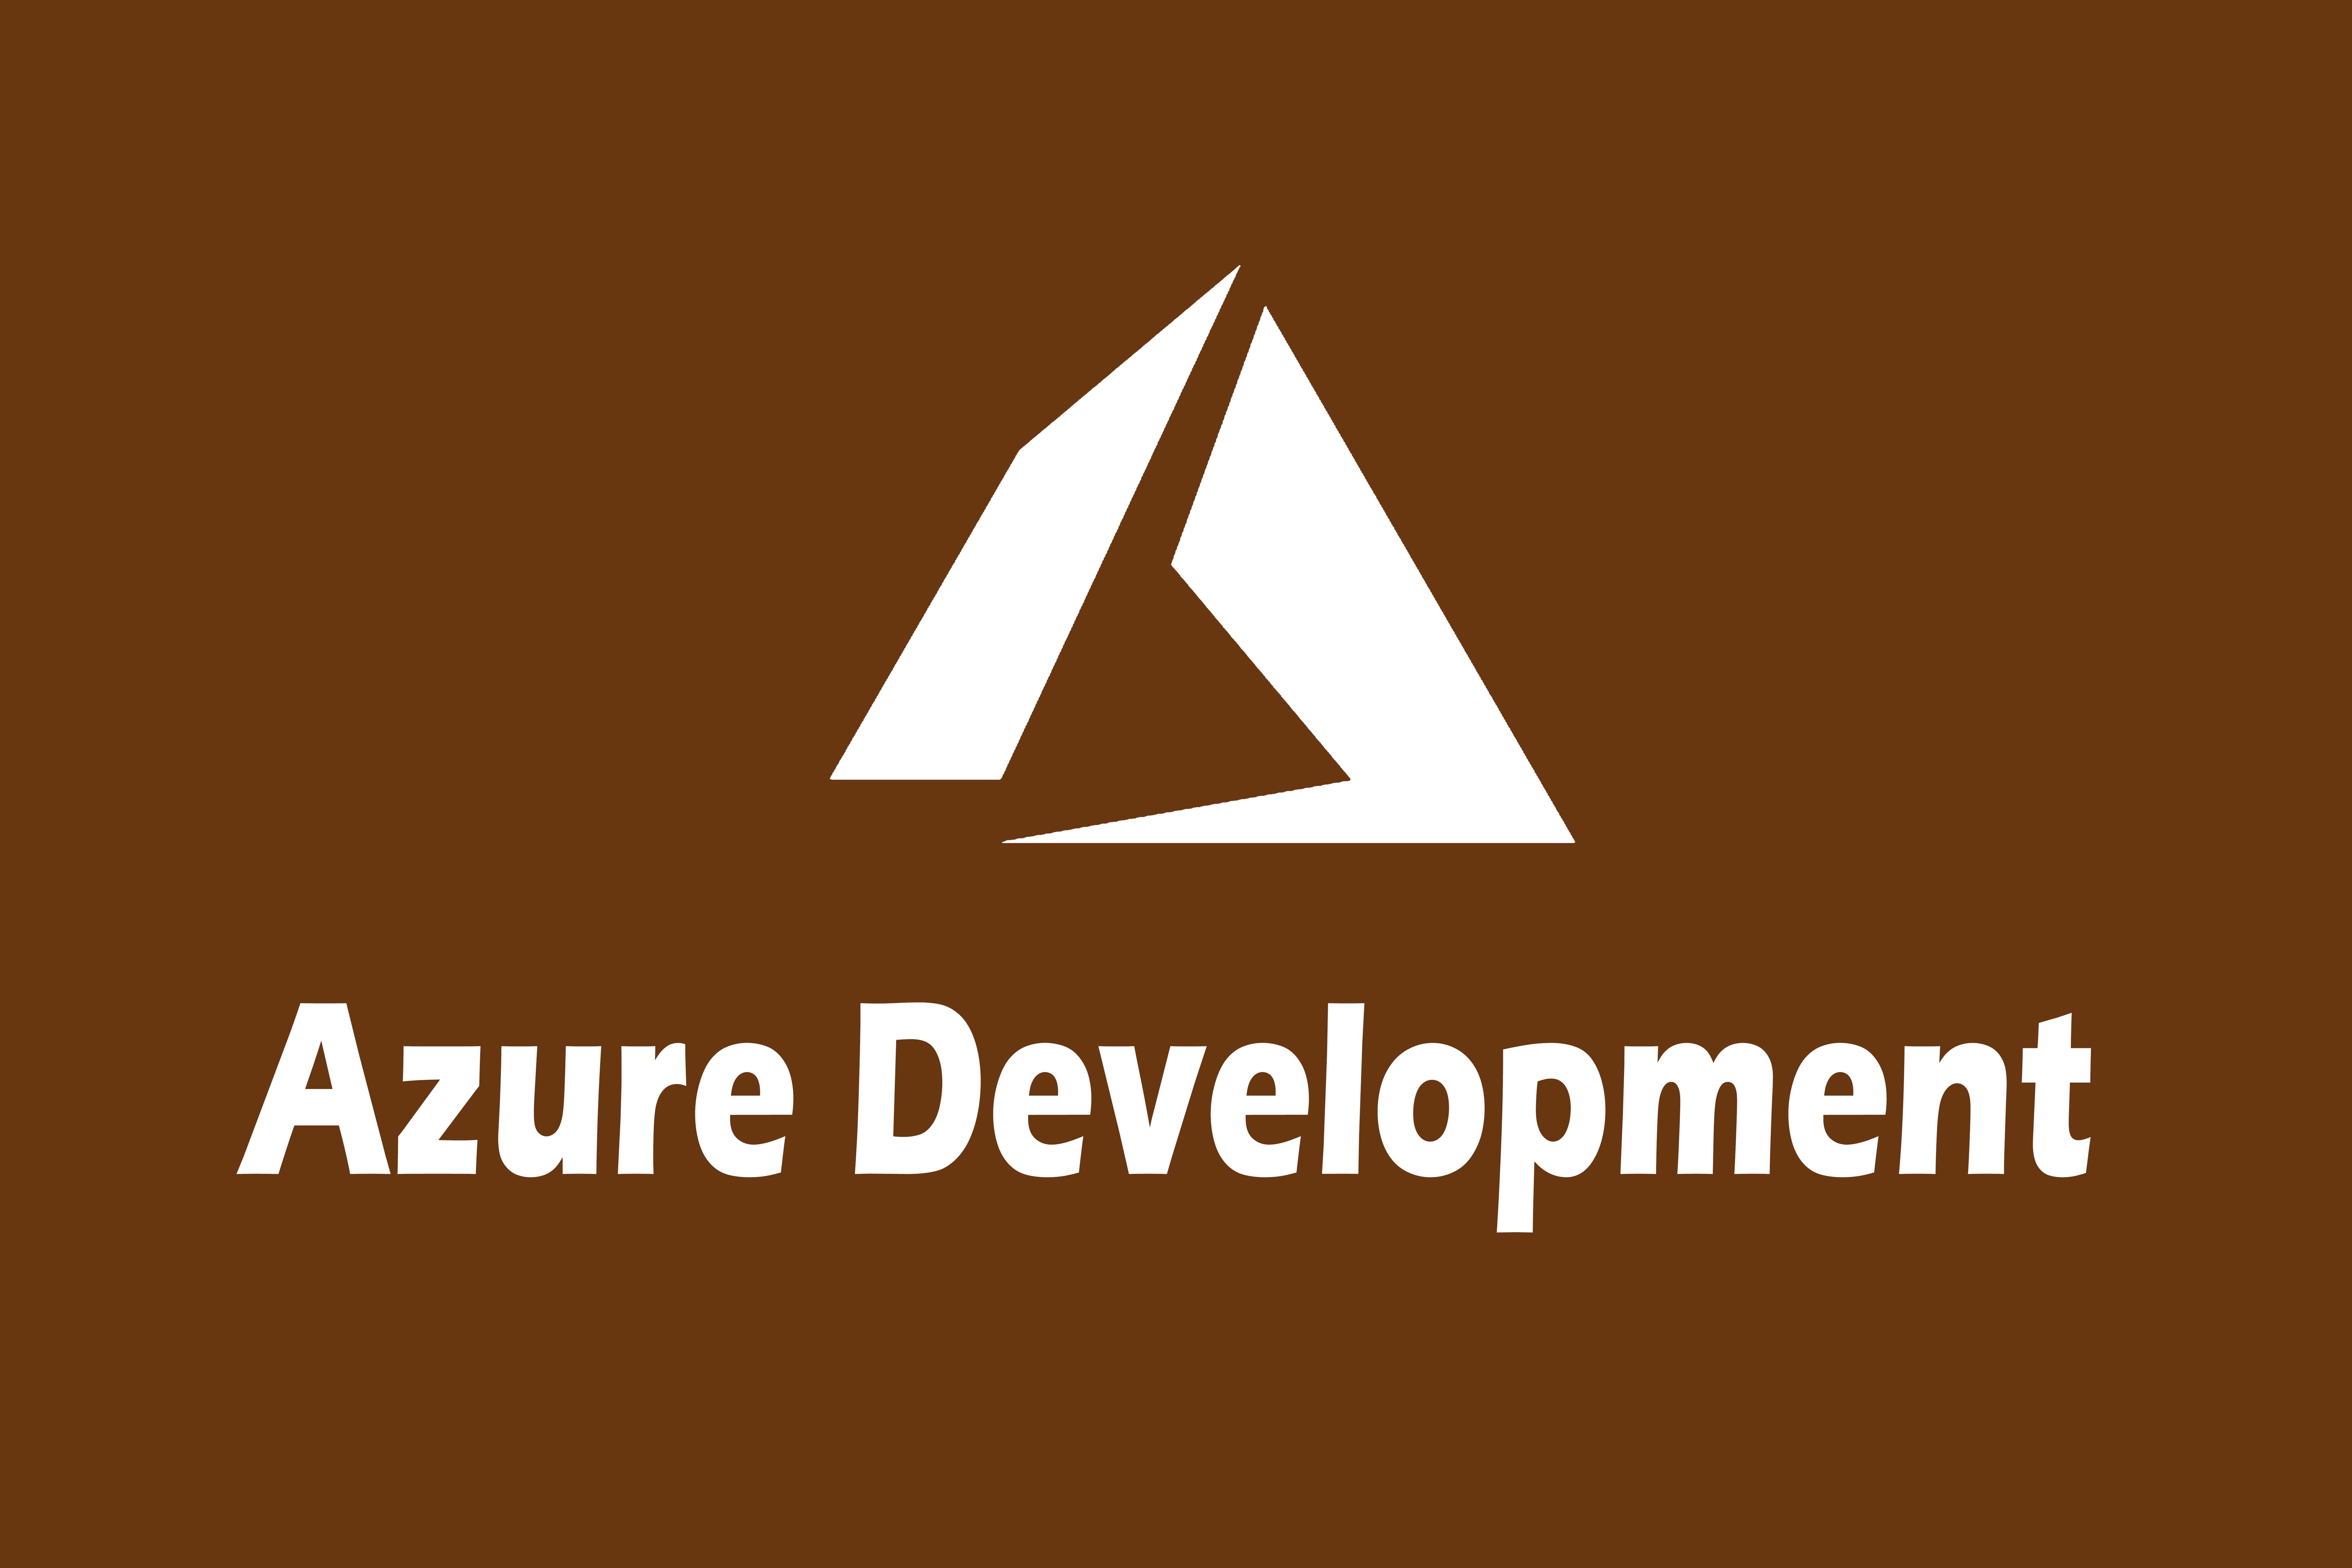 Microsoft azure development training